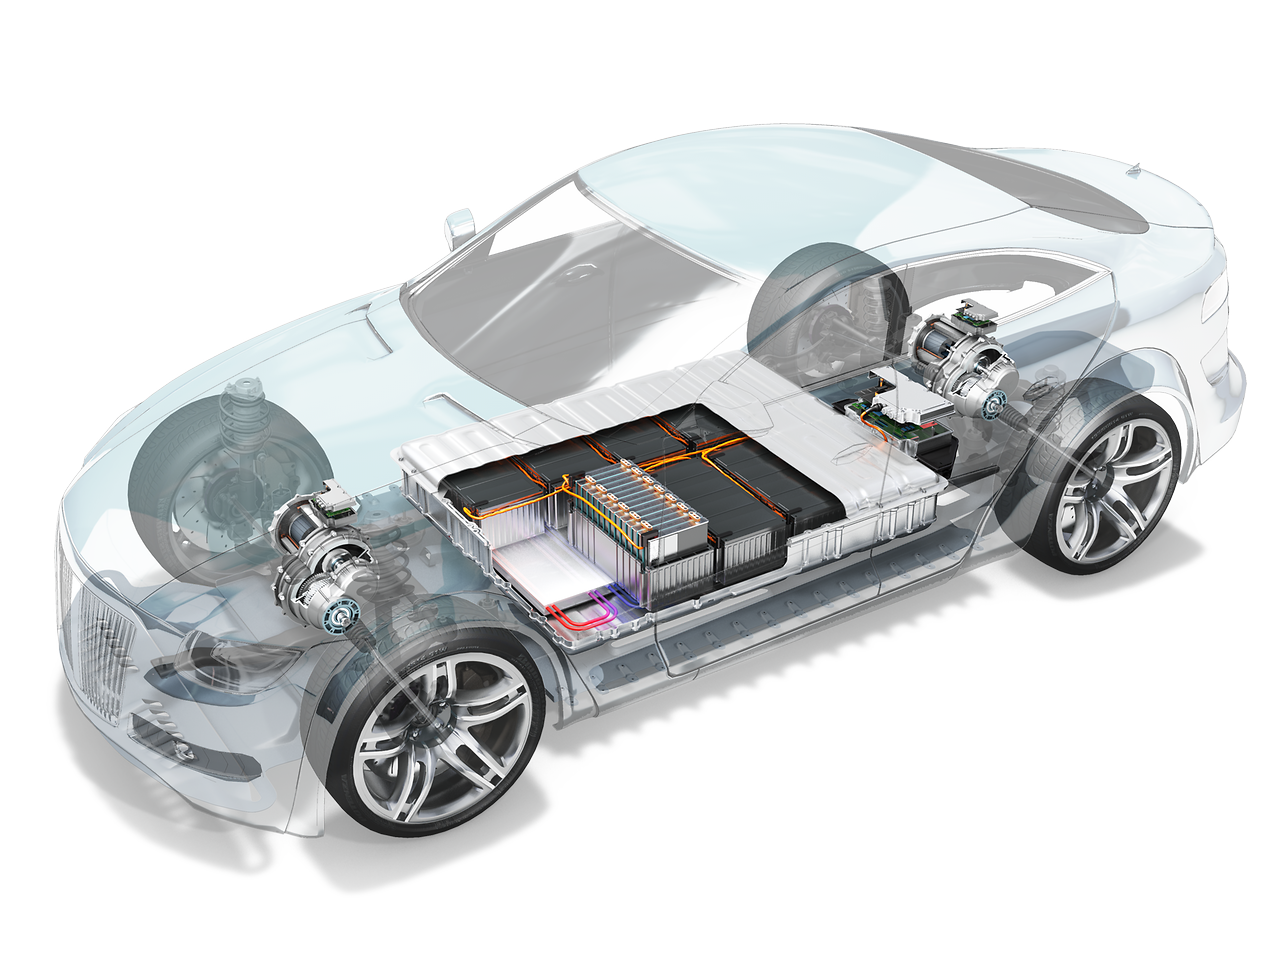 eMobility: car battery integration